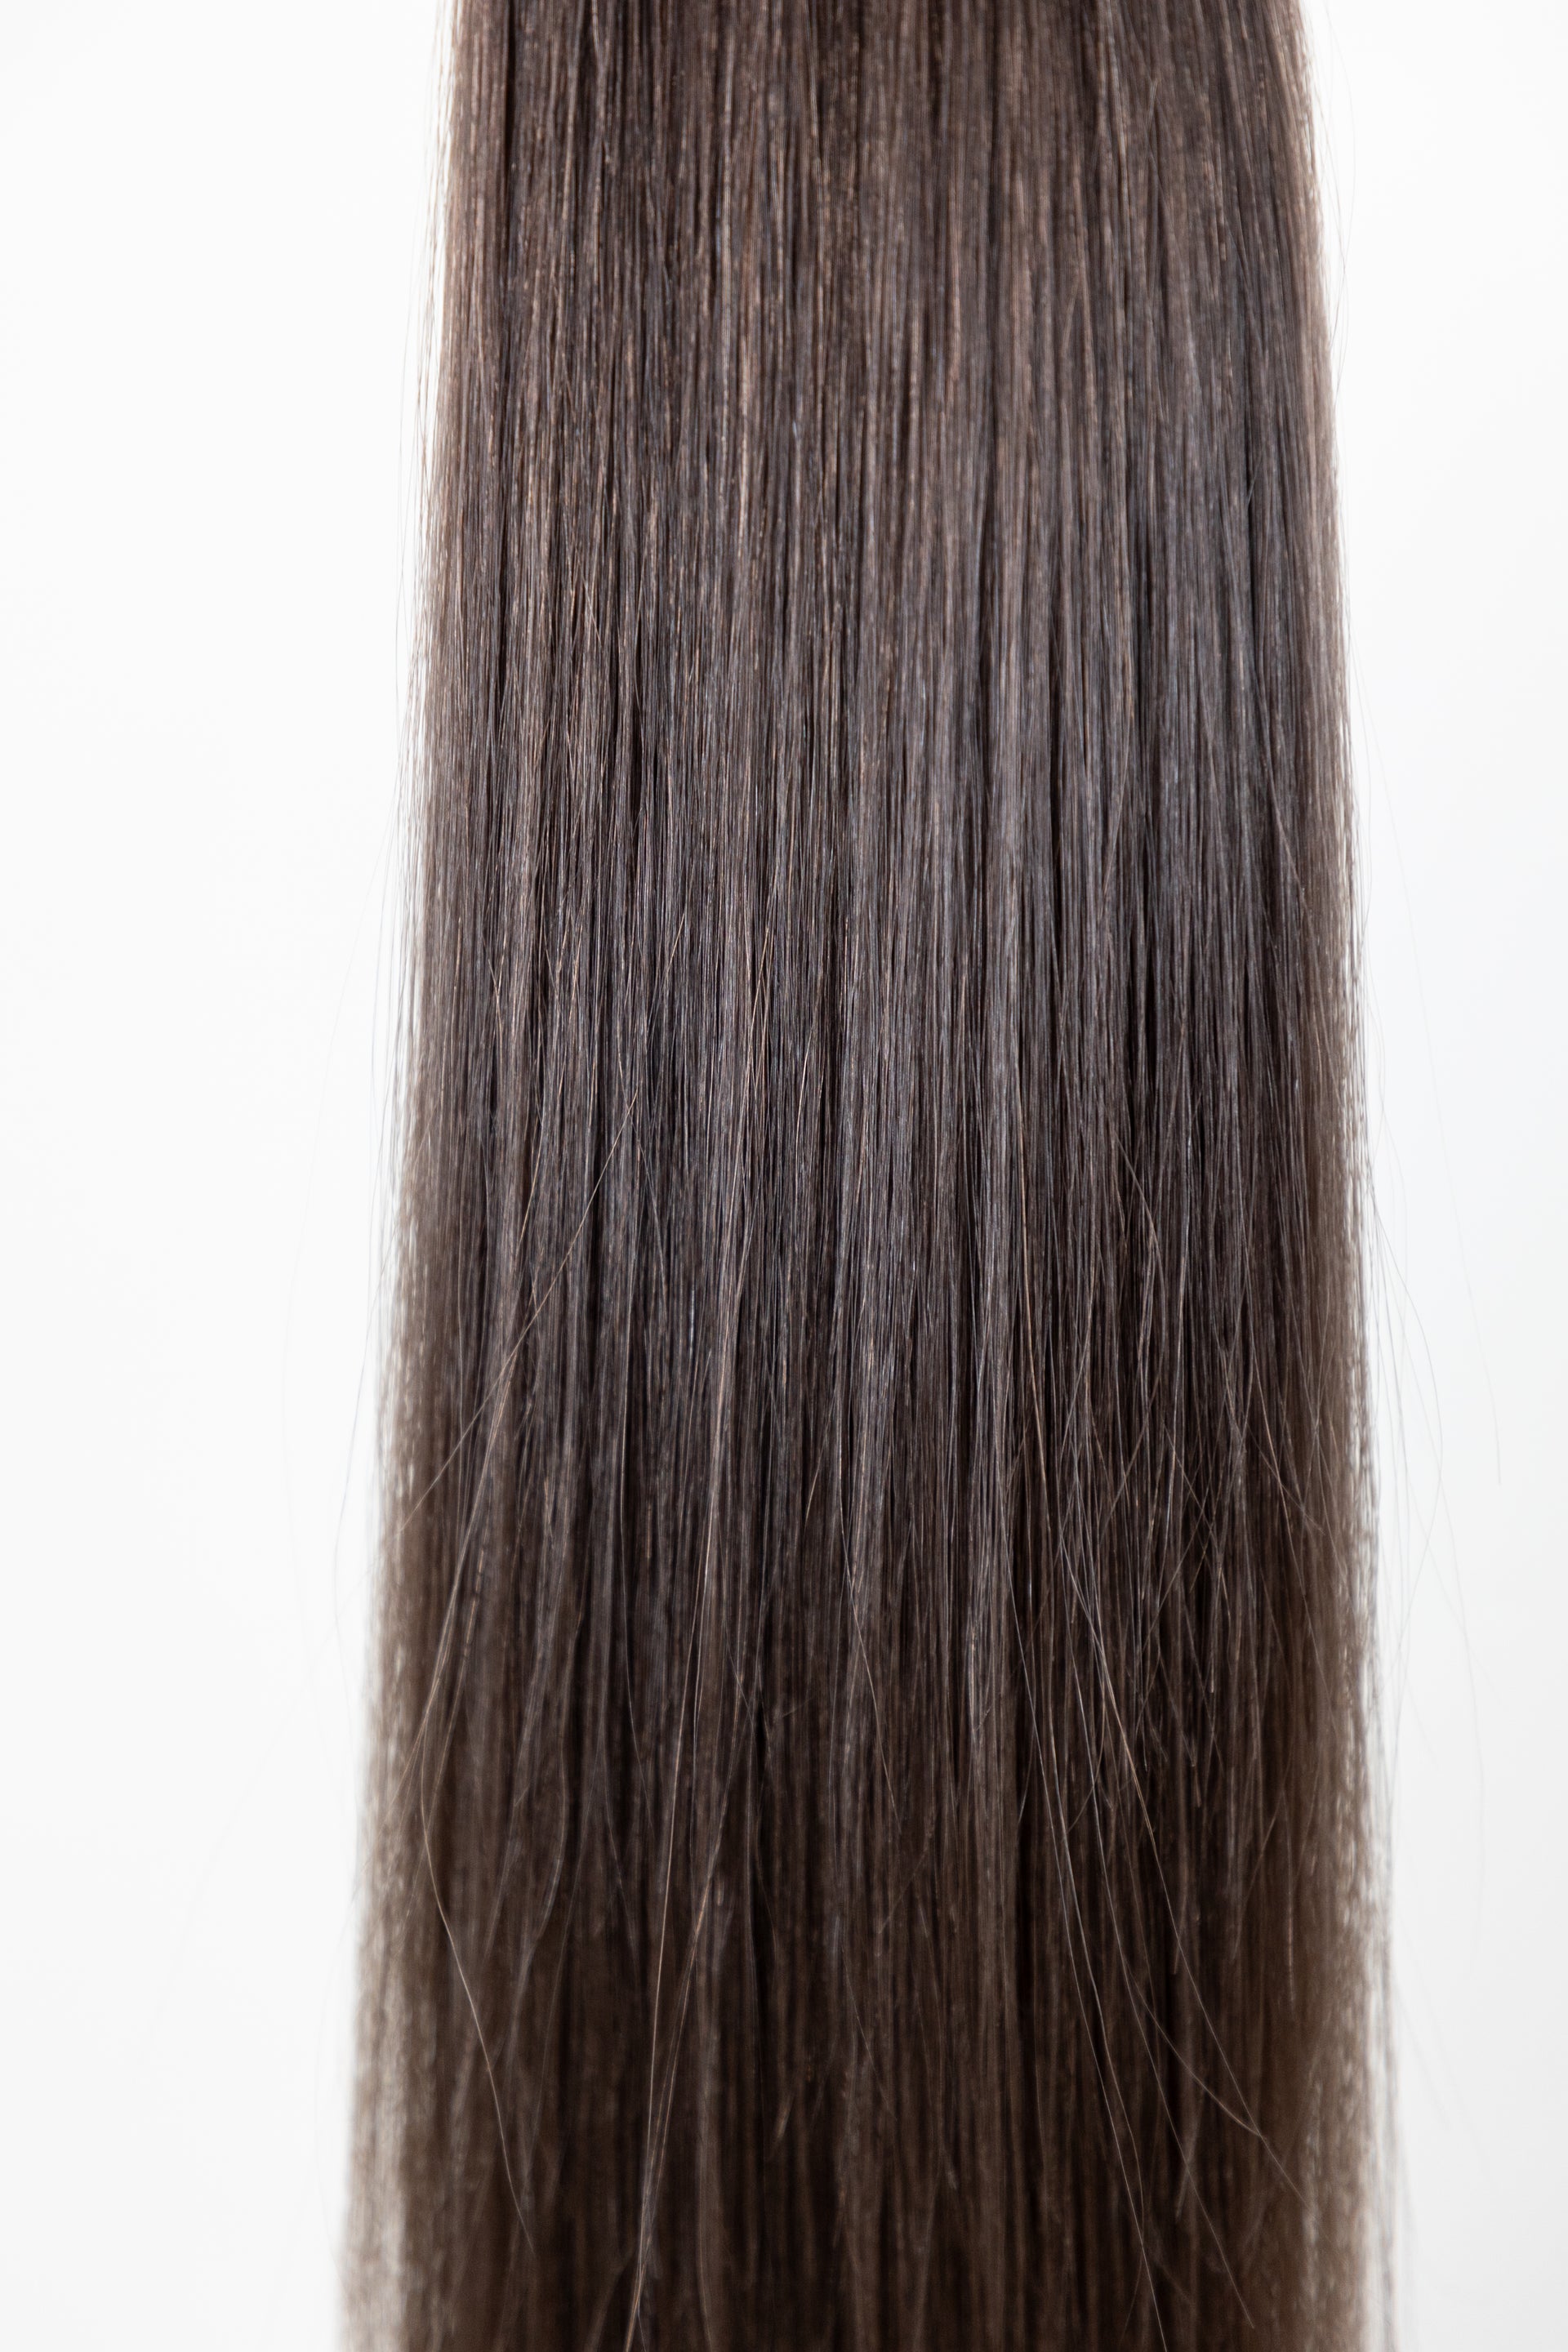 BALCK #3 European Virgin Remy Human Hair, Bulk